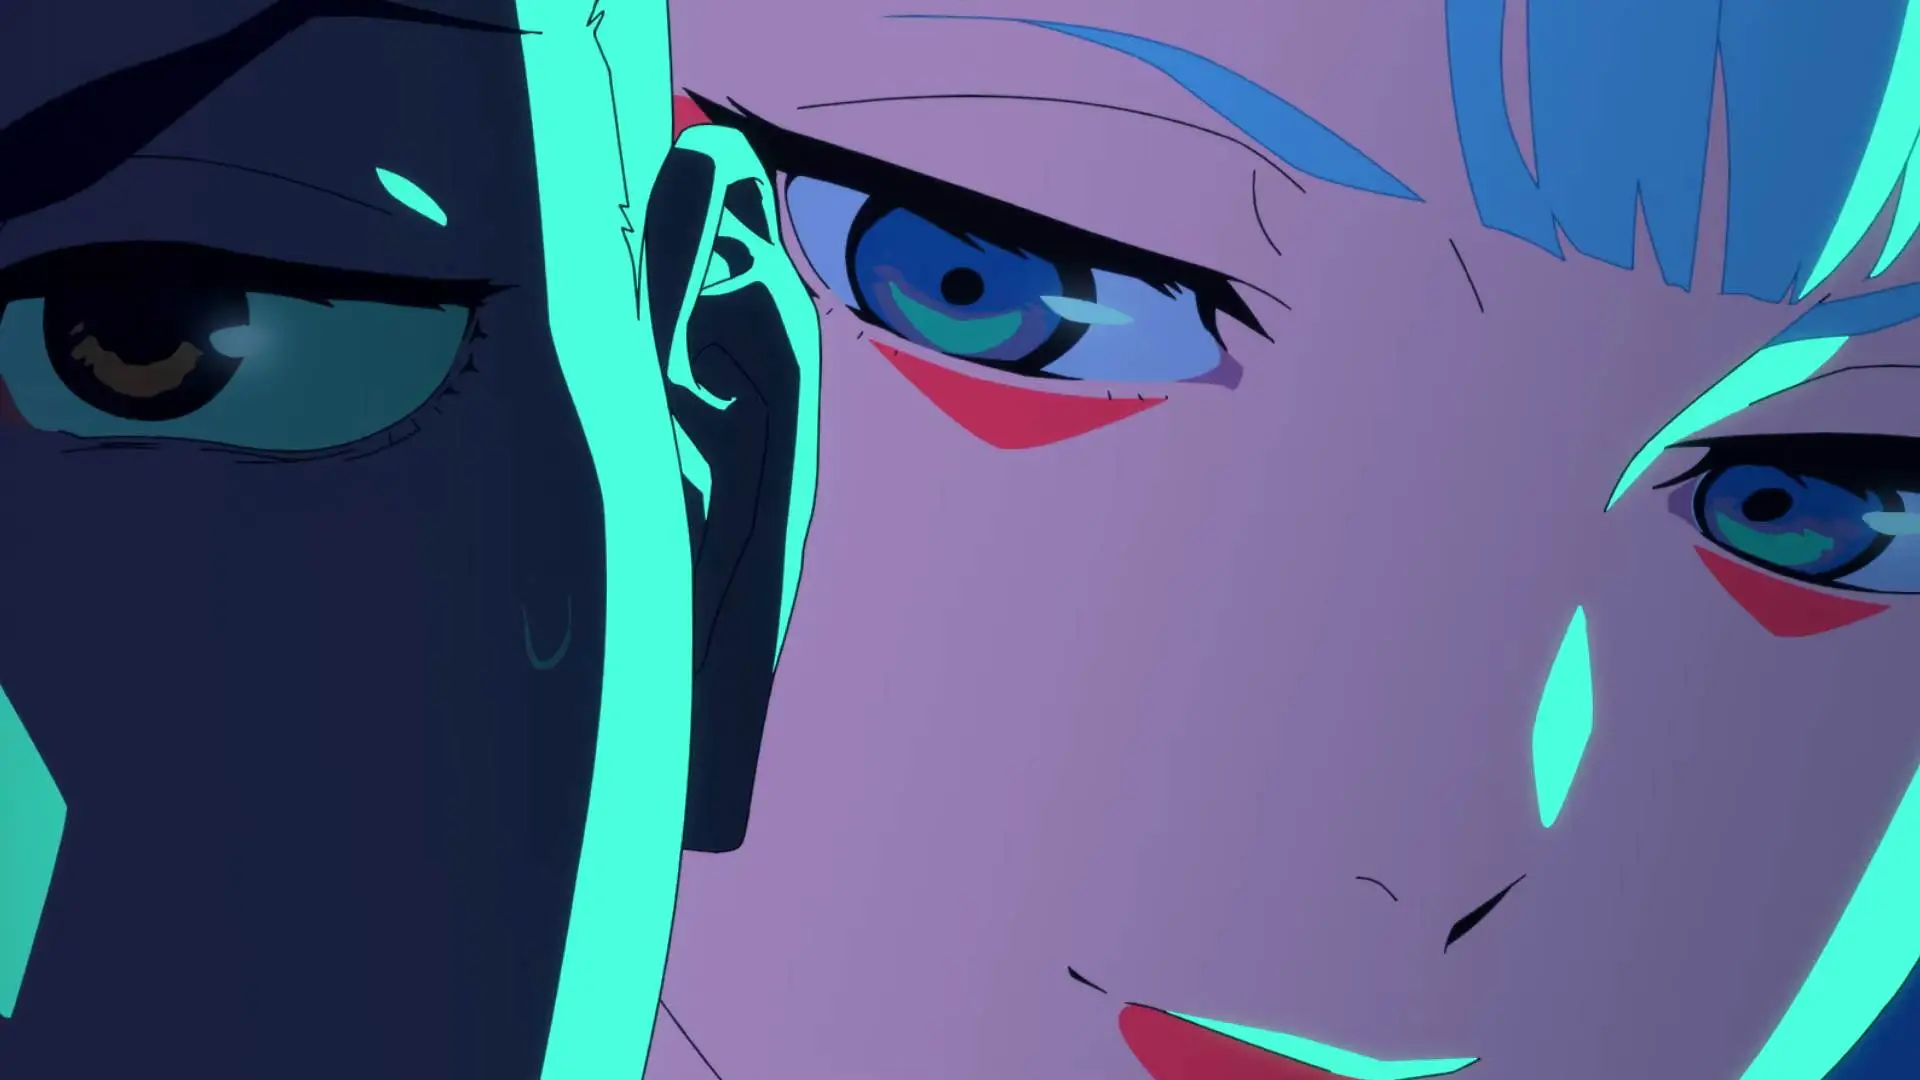 Cyberpunk: Edgerunners Could Be Studio Trigger's Best Anime So Far